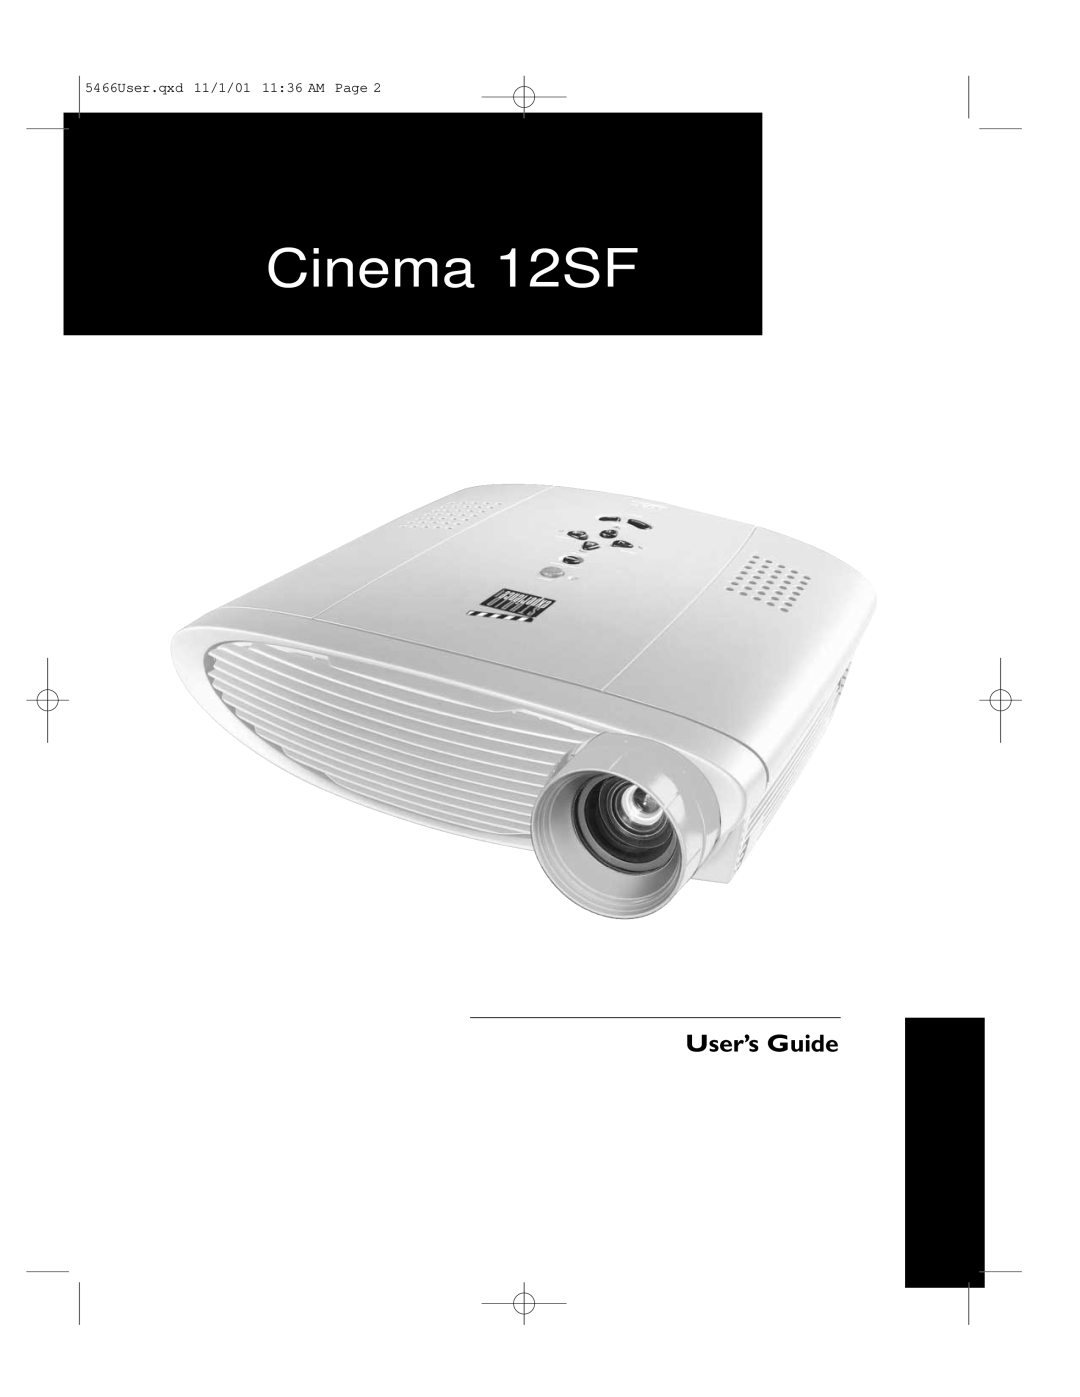 BOXLIGHT manual Cinema 12SF, User’s Guide, 5466User.qxd 11/1/01 1136 AM Page 